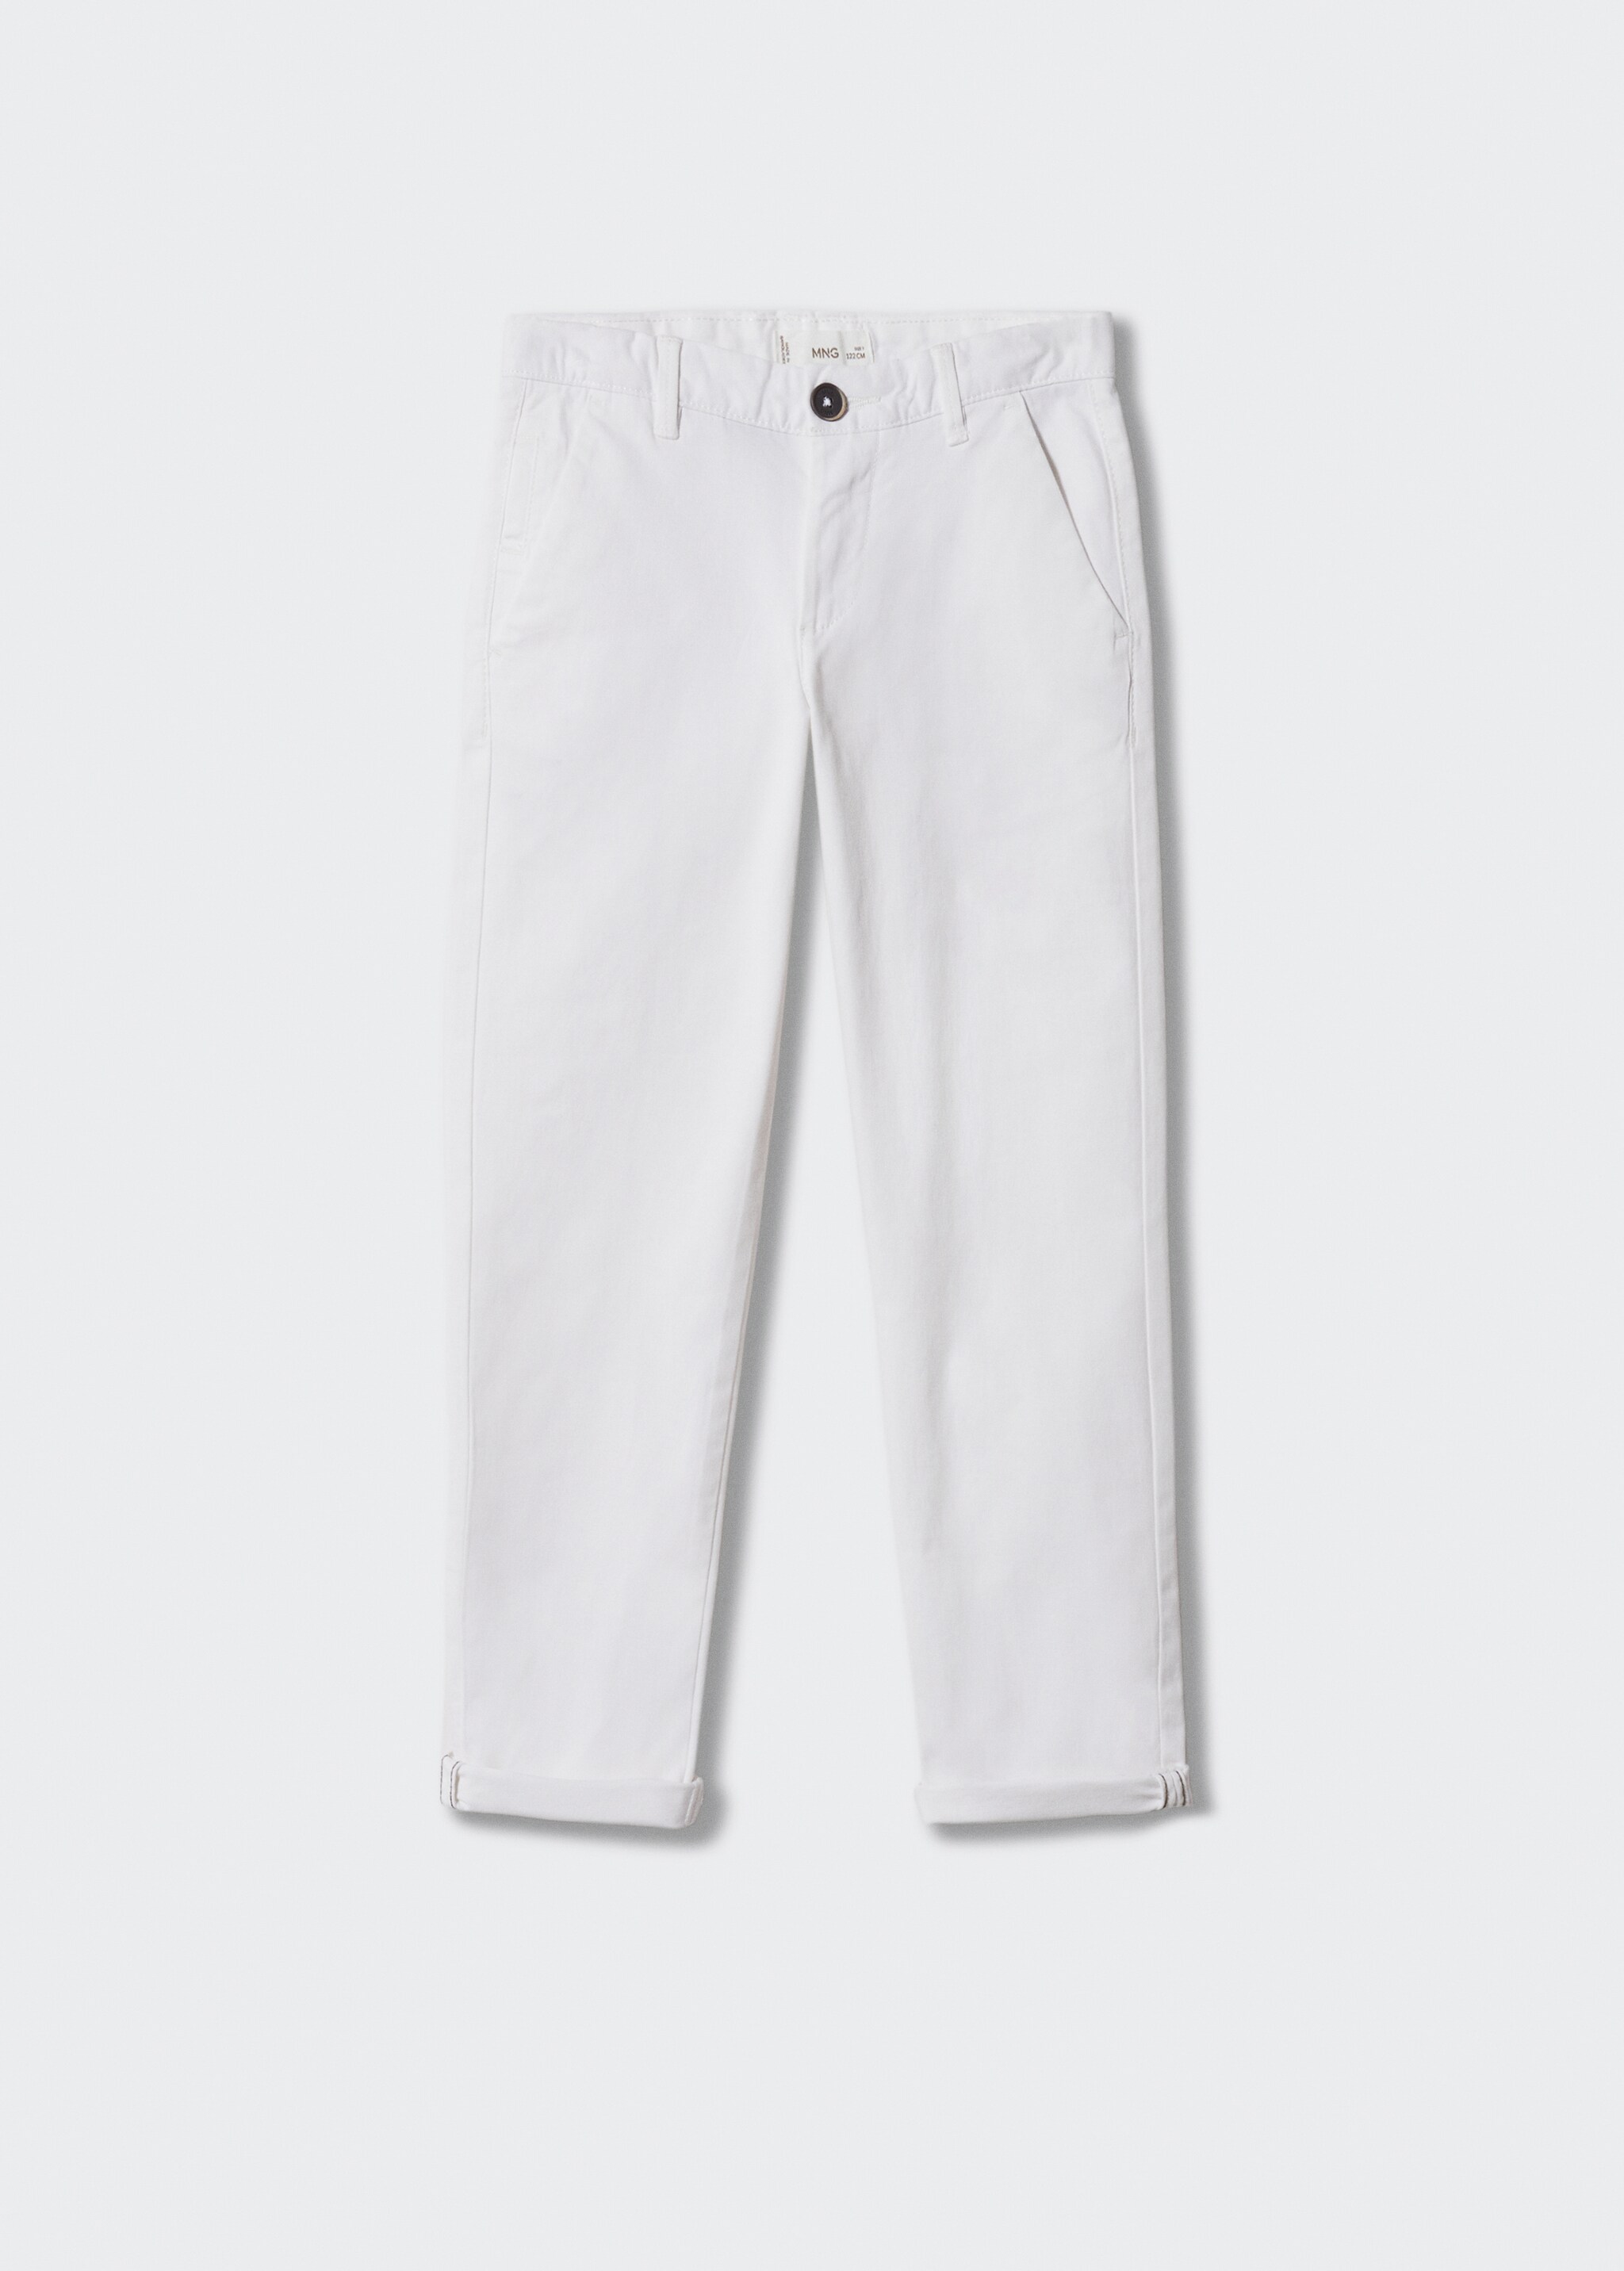 Pantalón chino algodón  - Artículo sin modelo